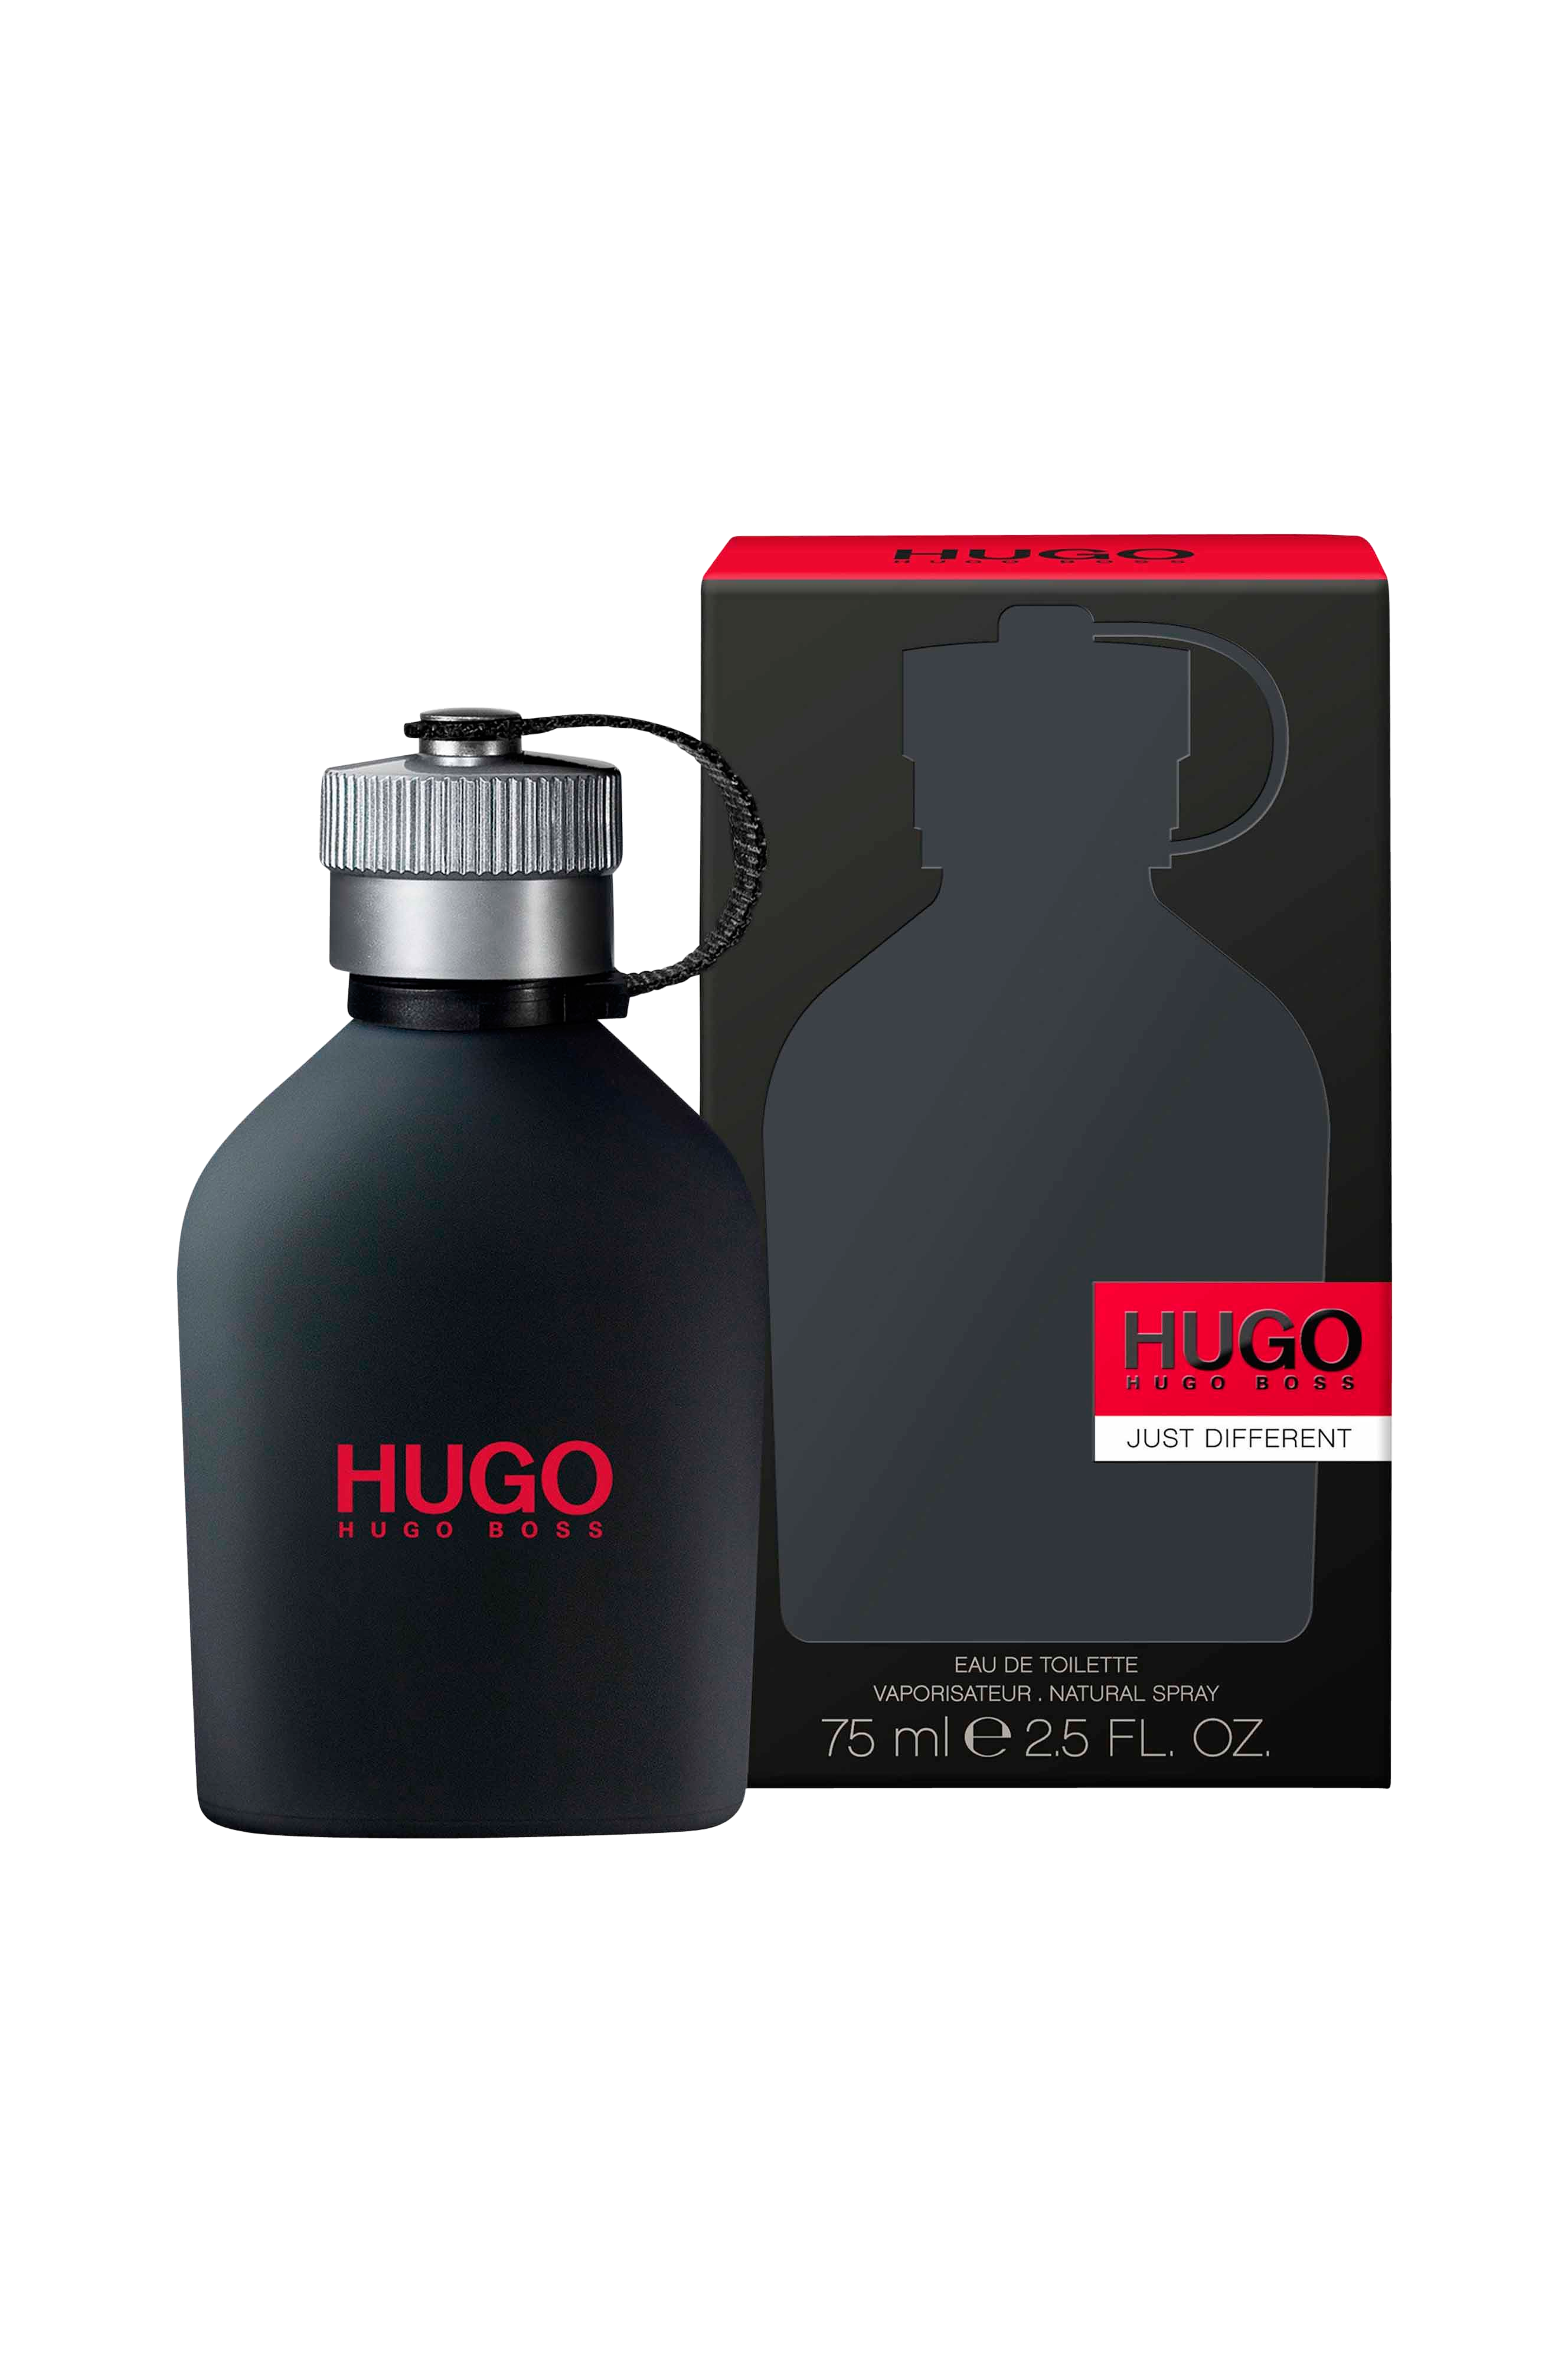 Hugo just different. Hugo Boss Hugo just different. Hugo Boss just different EDT (M) 75ml. Hugo Boss "Hugo just different" EDT, 100ml. Hugo Boss Hugo just different [m] EDT - 125ml.